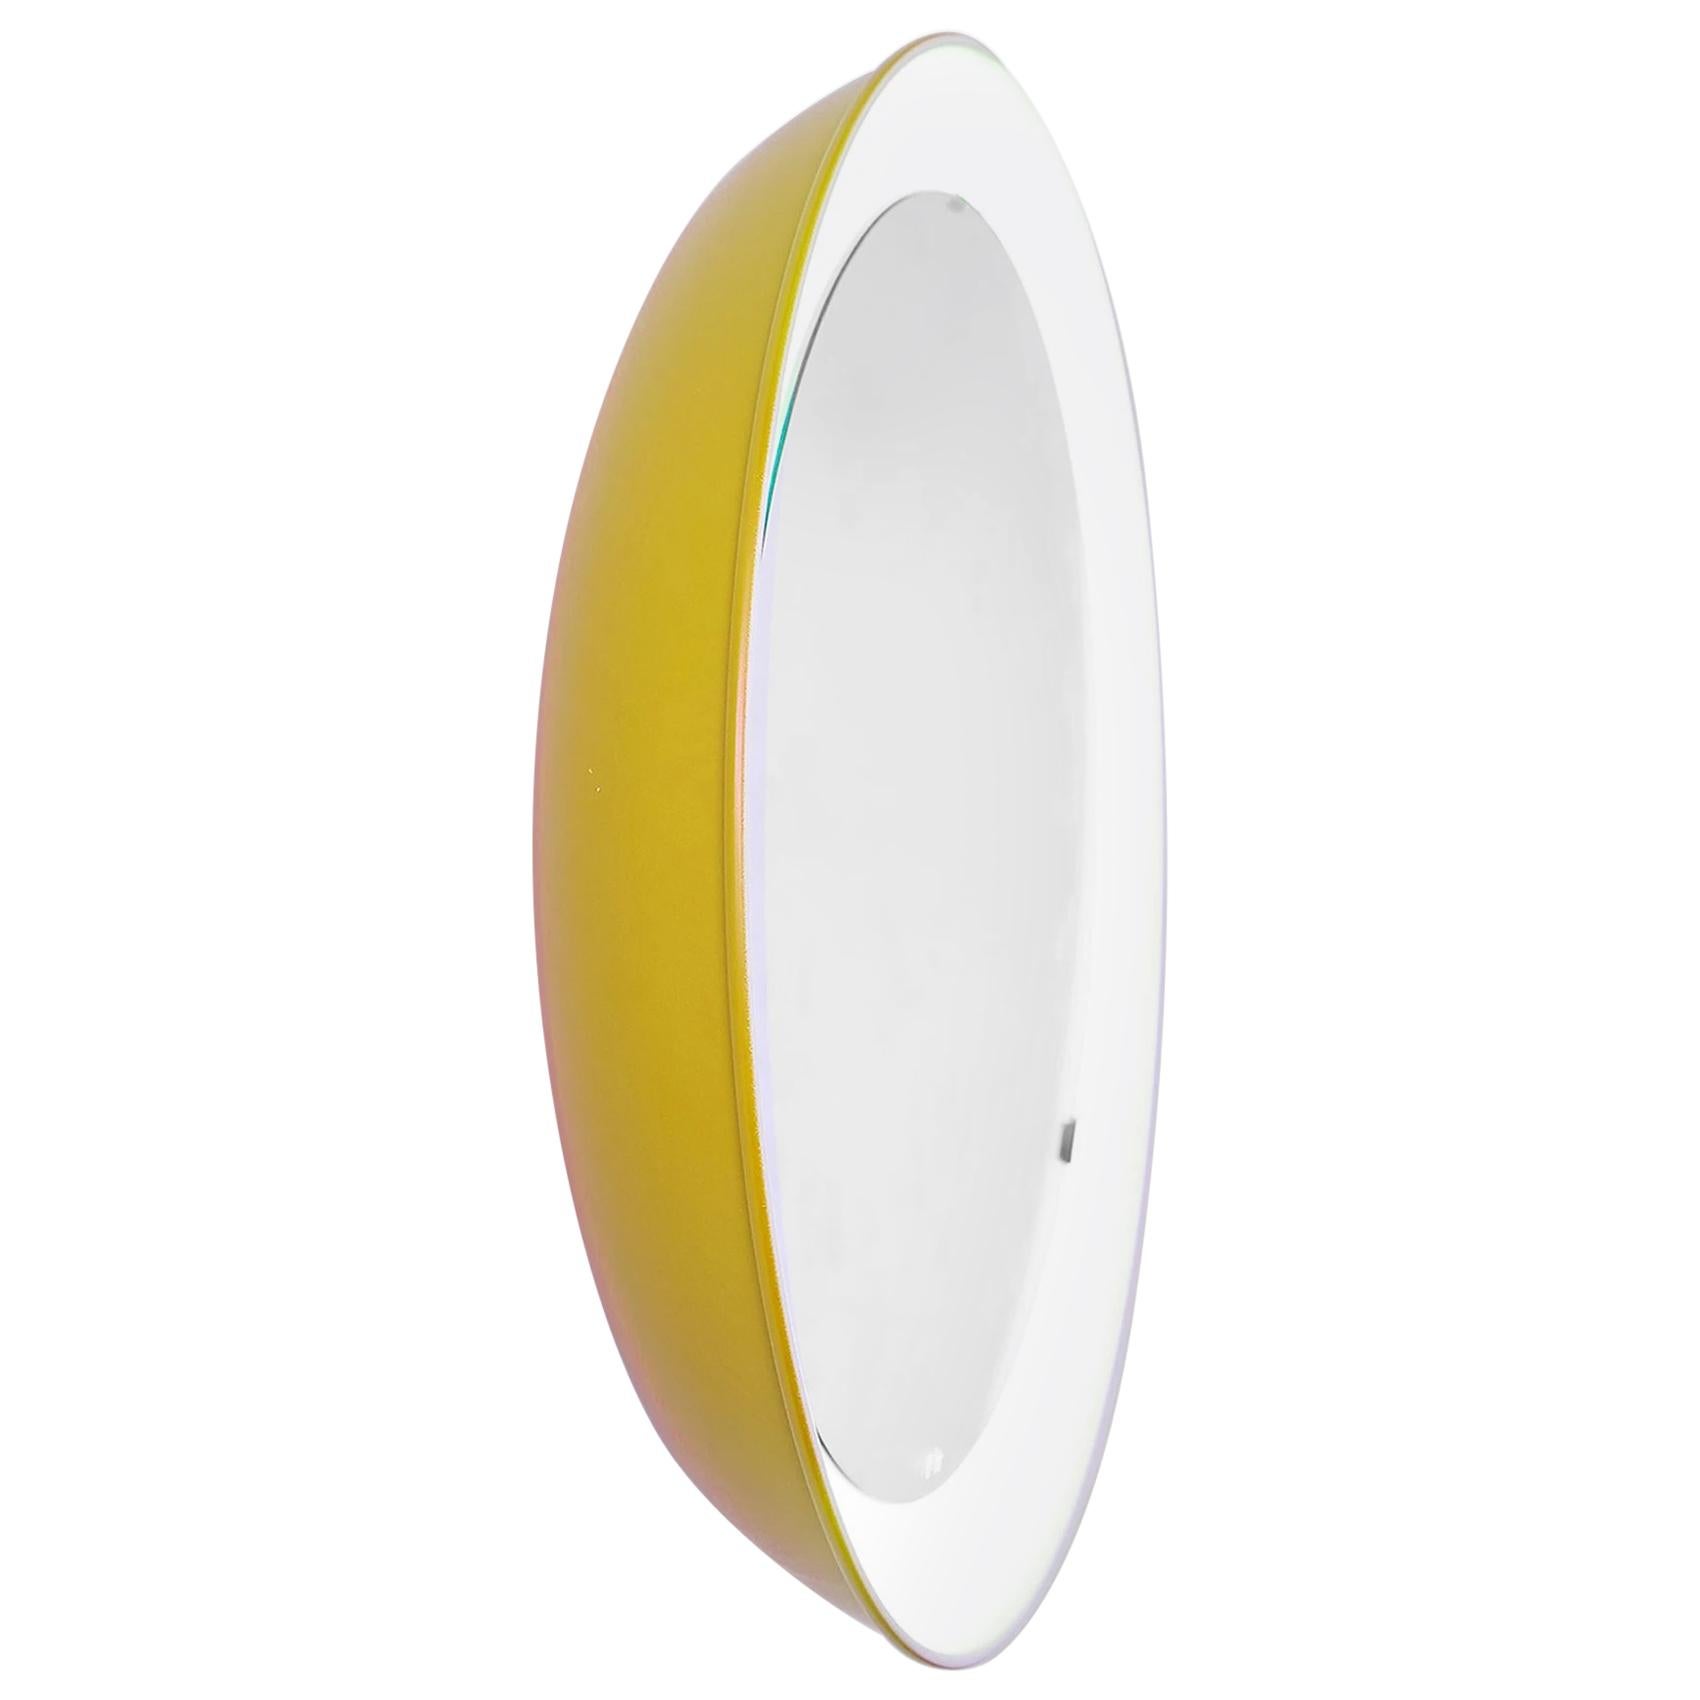 PH Mirror, yellow painted satin matt, diameter 700mm, on/off pull cord, ph